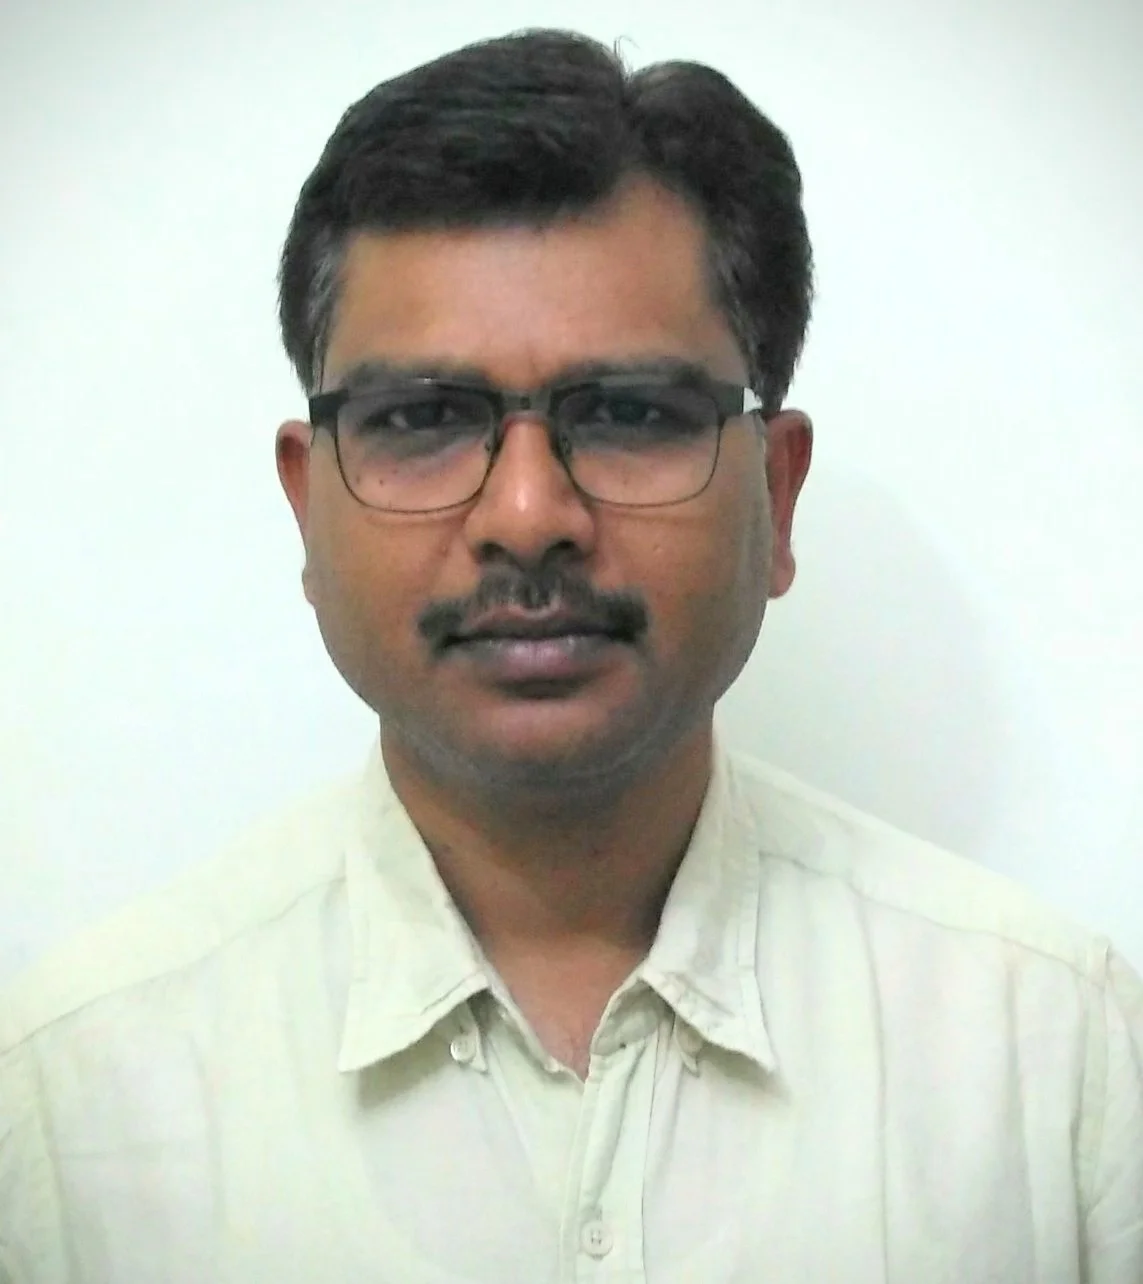 KK Pattanaik,Associate Professor, Indian Institute of Information Technology and Management,Gwalior